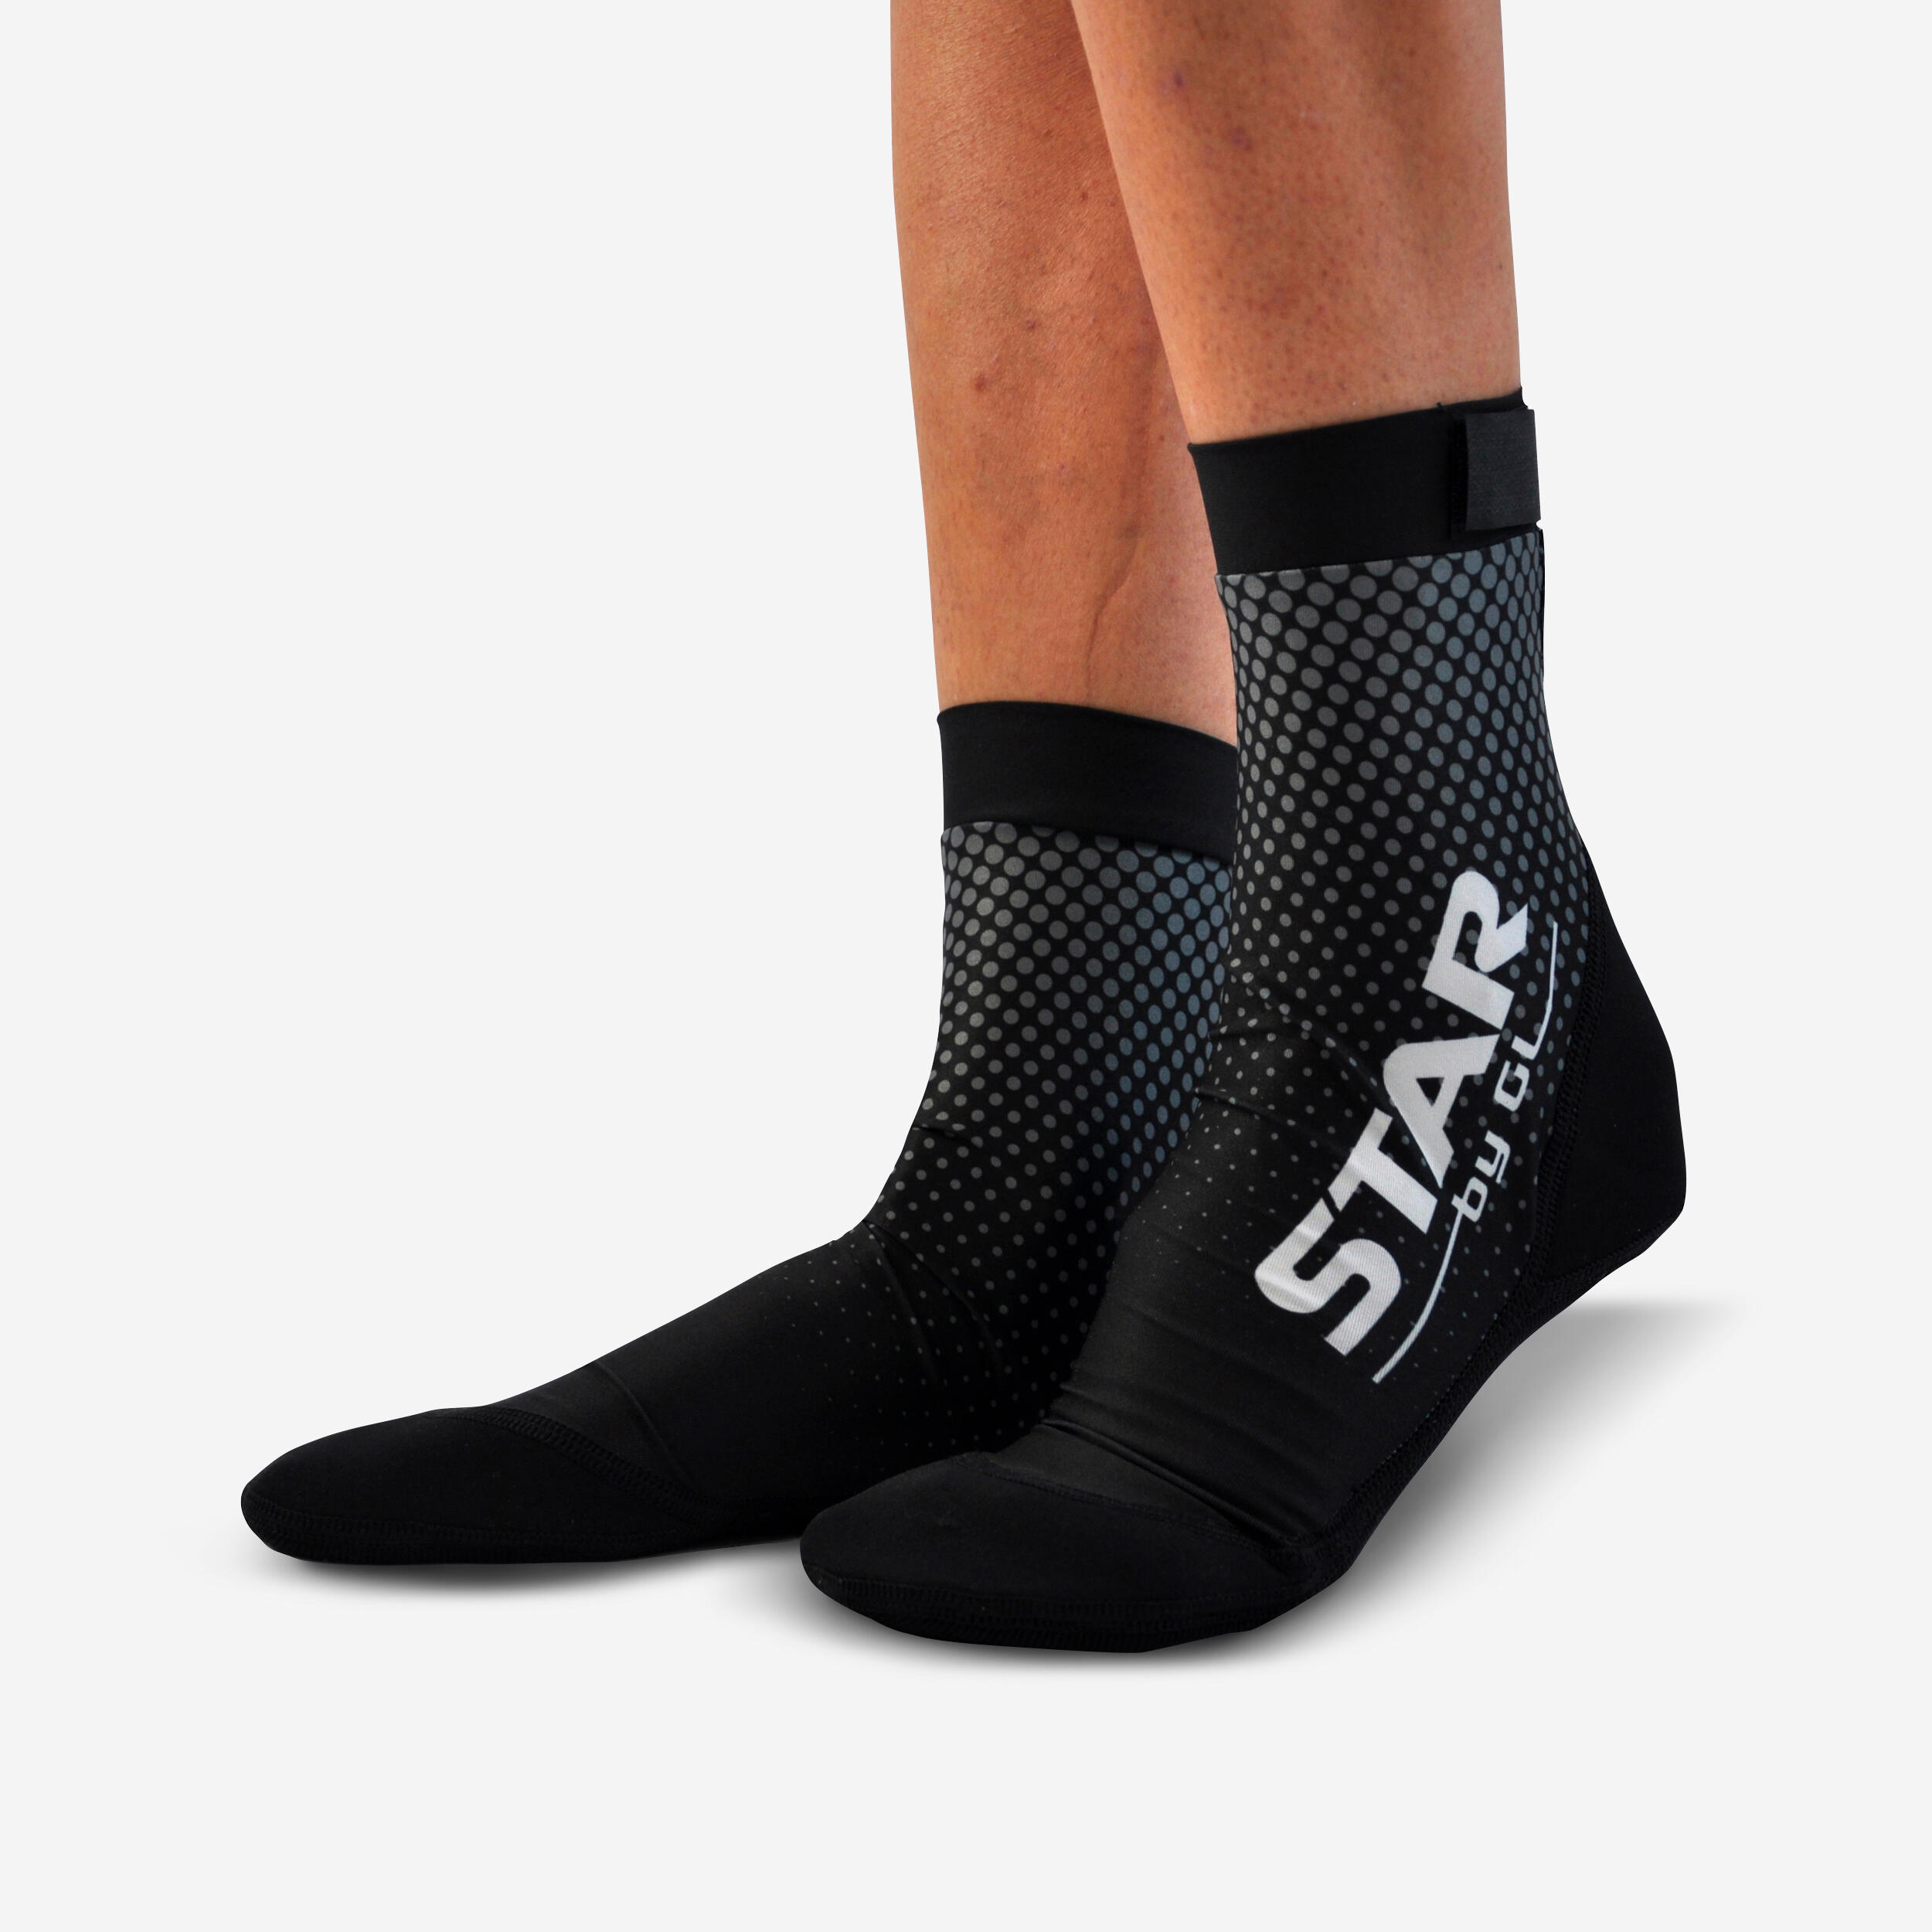 STAR BY GL Adult Beach Sports Sand Socks - Black